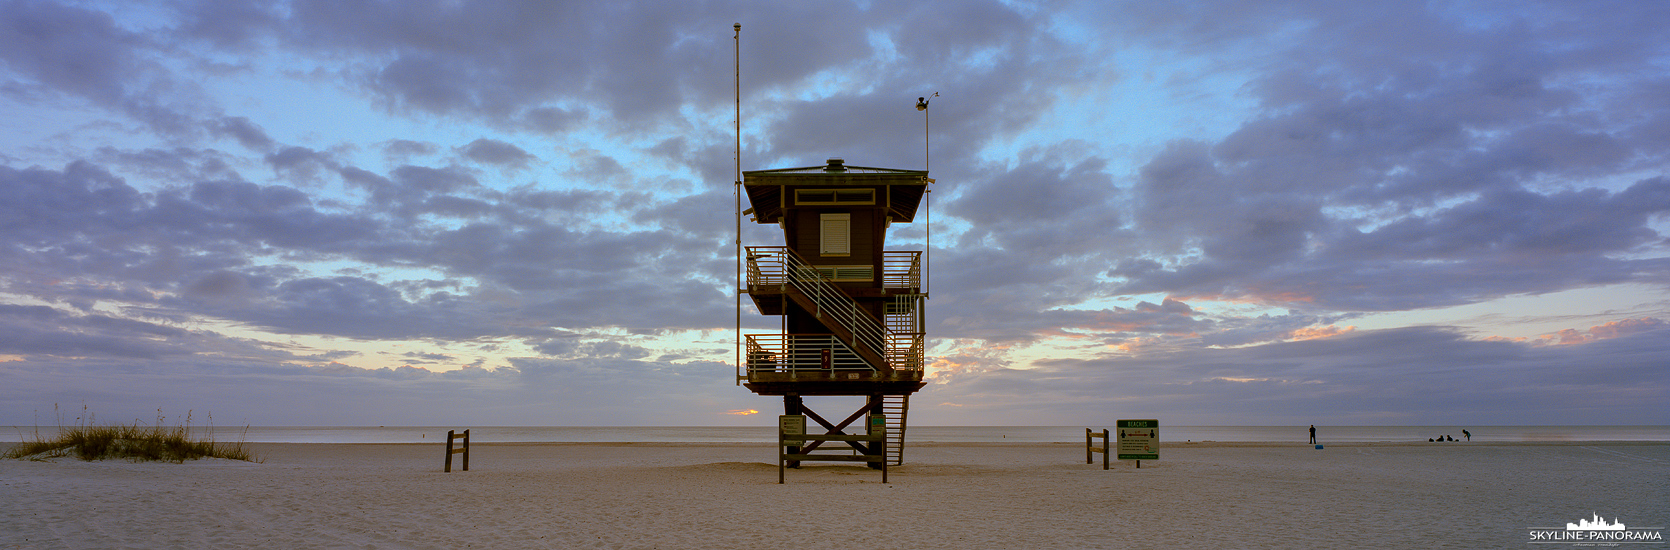 Panorama Florida - Ein "Lifeguard Observation Tower" am Coquina Beach in Bradenton Beach Florida. Das Panorama wurde kurz nach dem Sonnenuntergang im November 2021 erstellt.